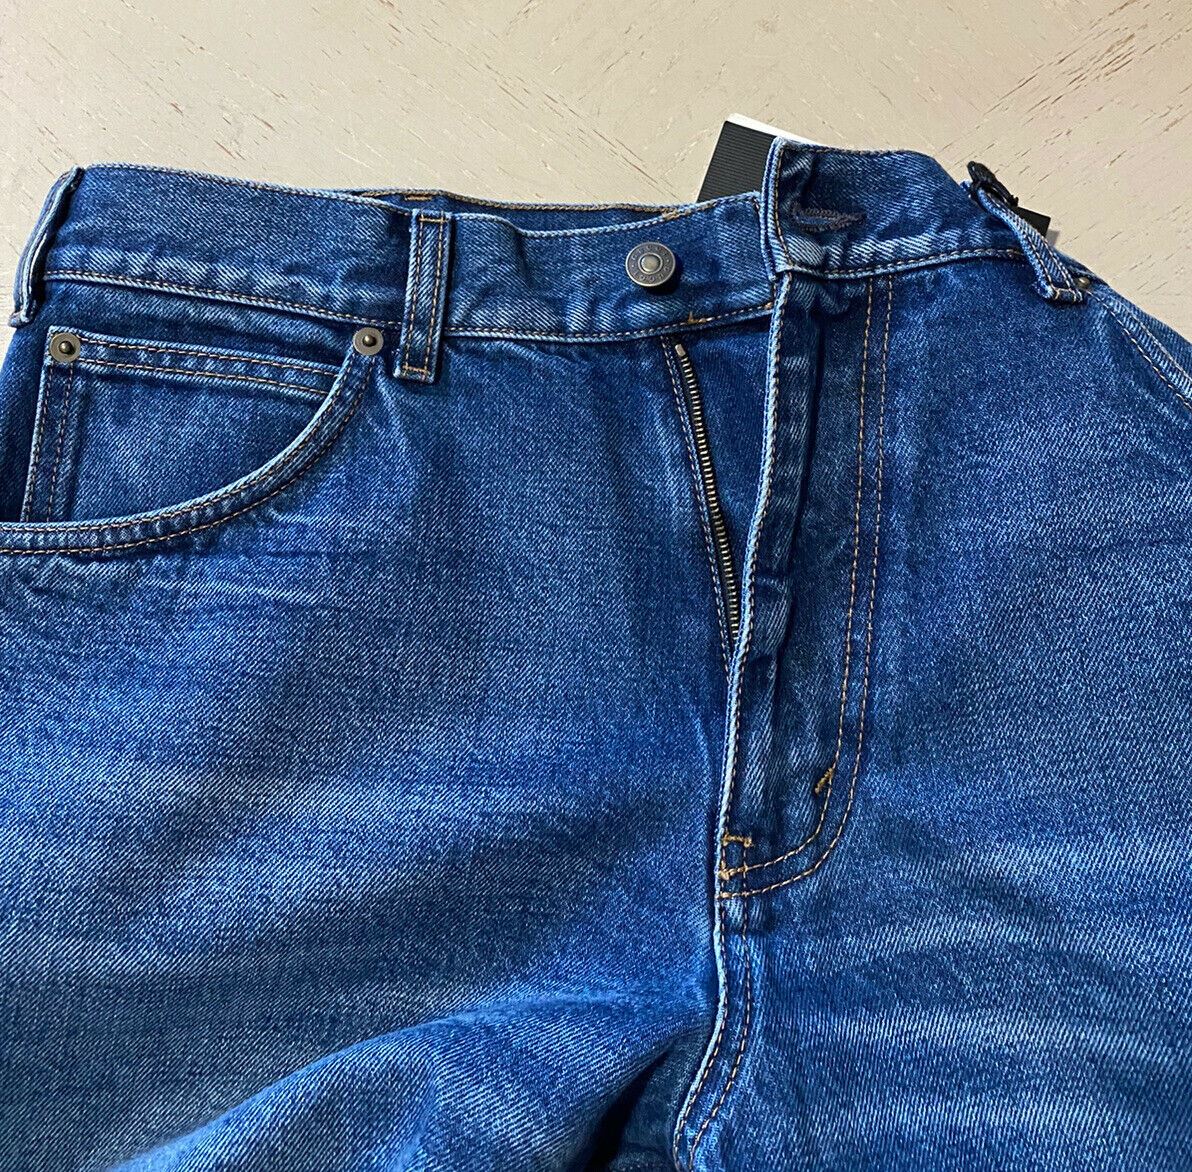 Мужские джинсы Gucci за 1200 долларов NWT 36 США Италия